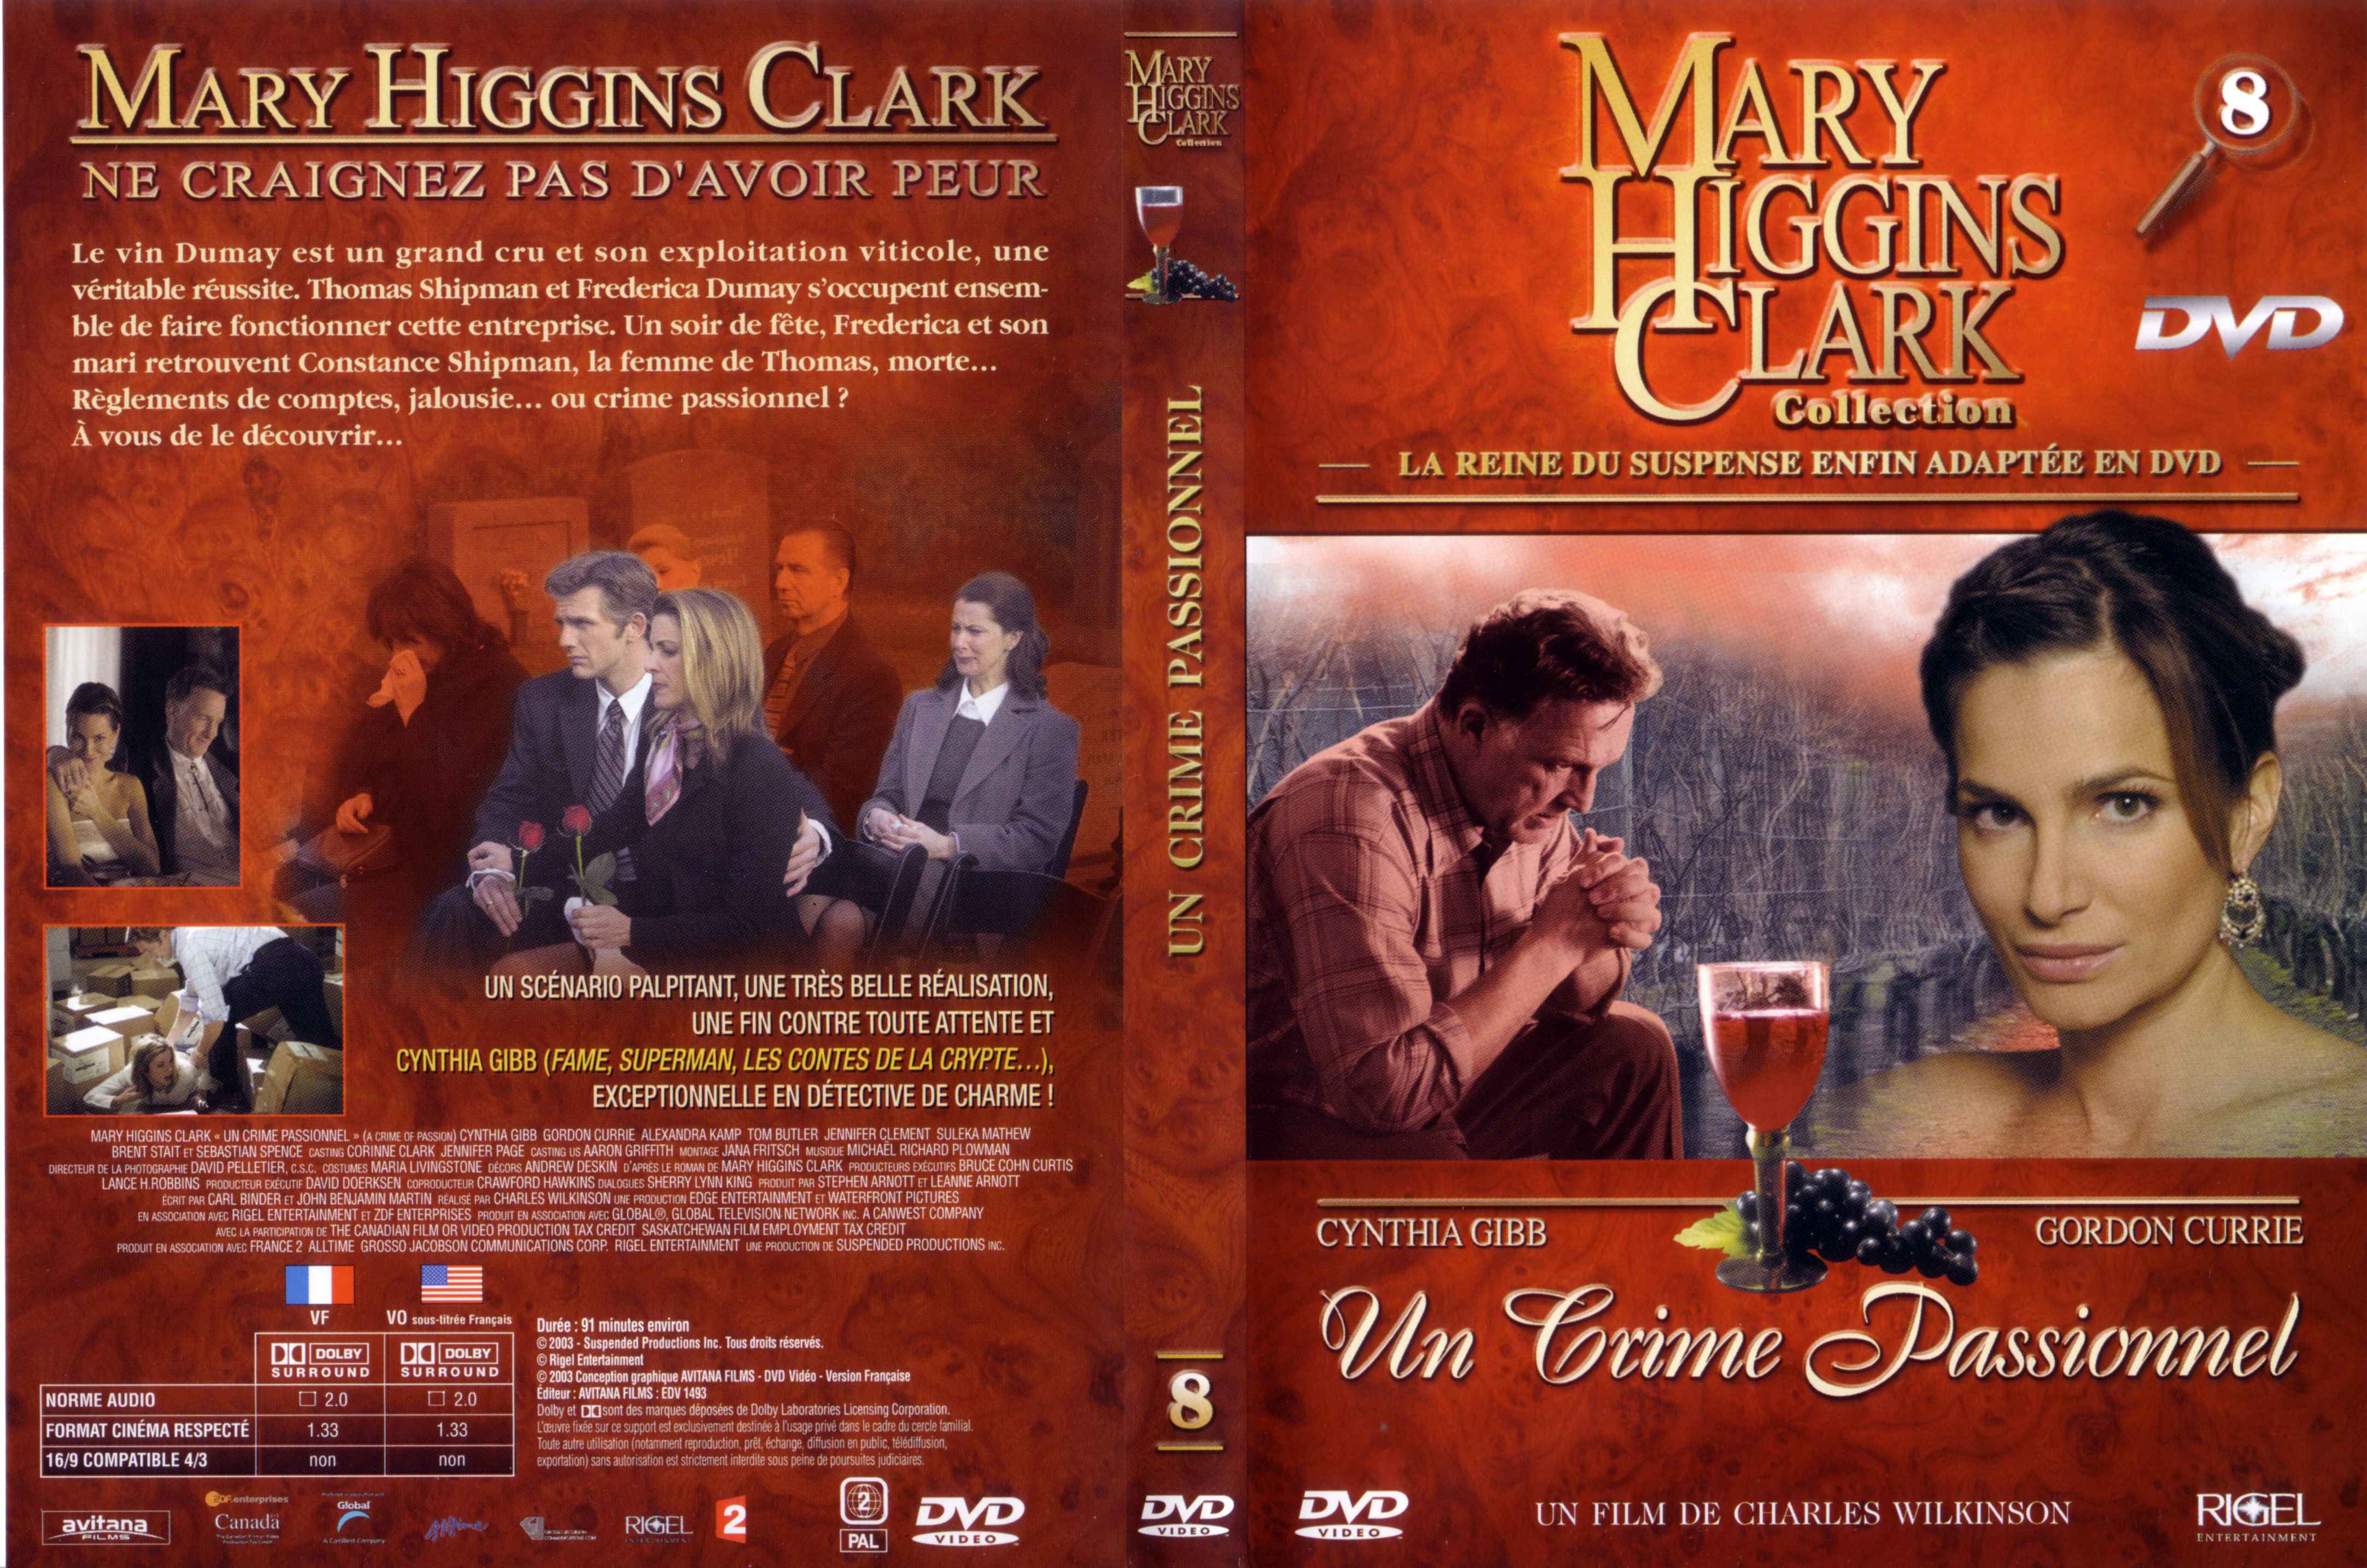 Jaquette DVD Mary Higgins Clark vol 08 - Un crime passionnel